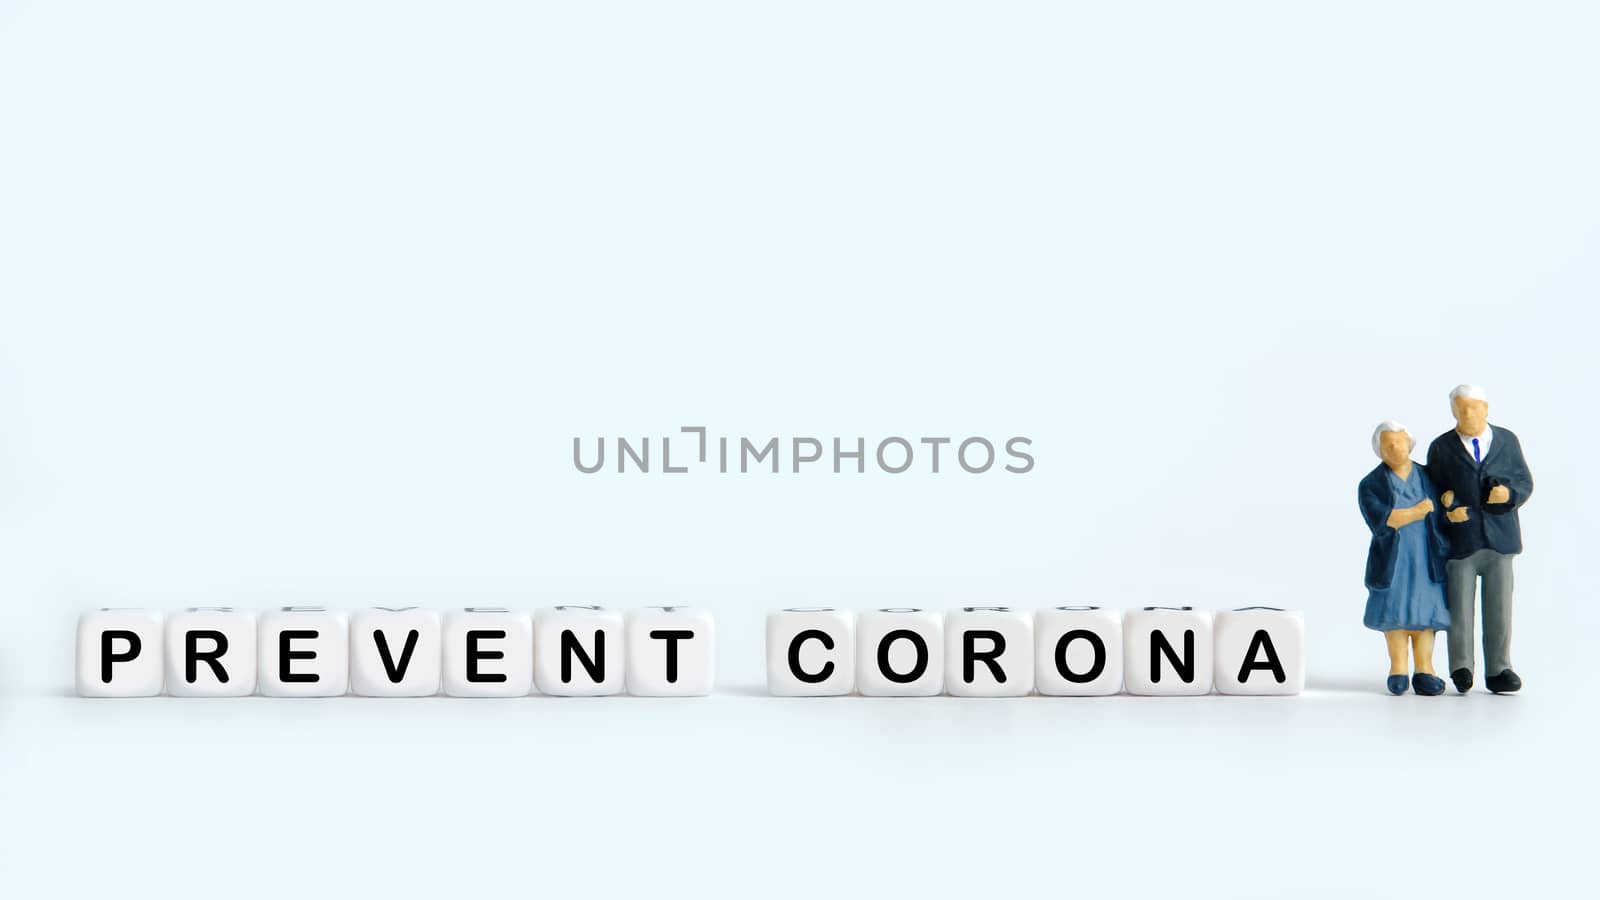 Pandemic corona virus conceptual miniature people photography – word beads alphabet covid with doctor figure. Image Photo